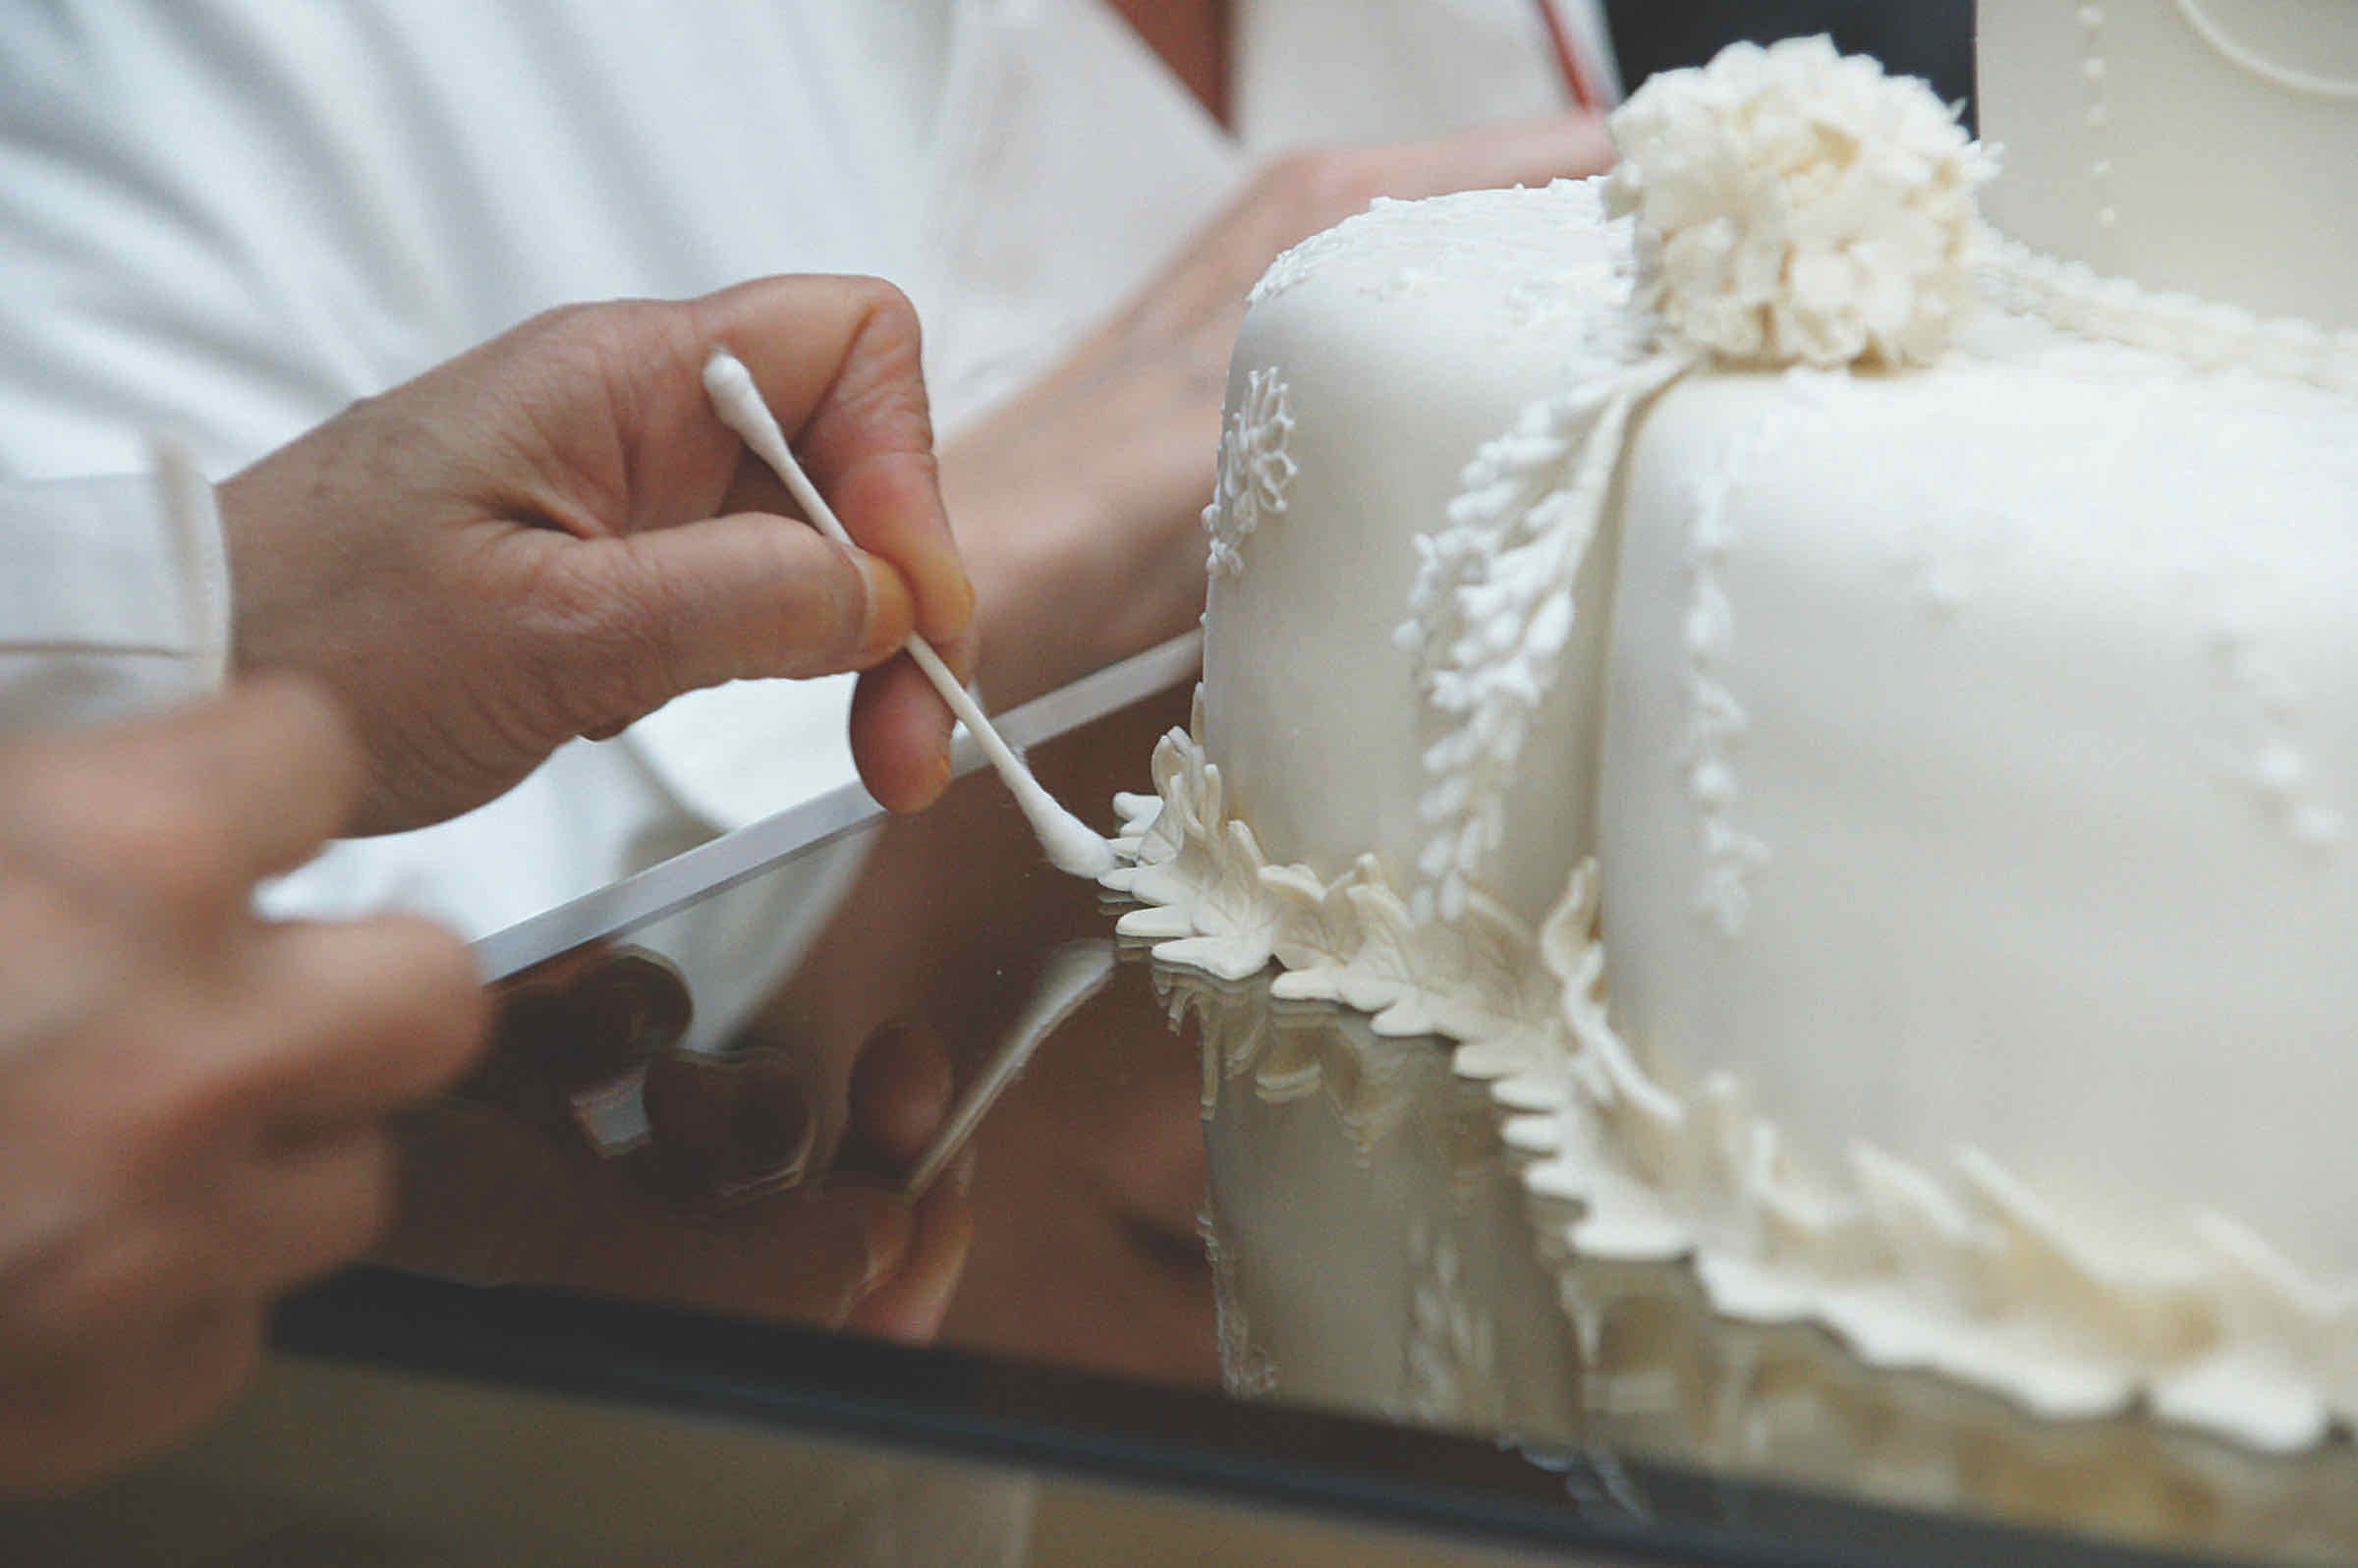 ROYAL BLUE & GOLD WEDDING CAKE - Rashmi's Bakery